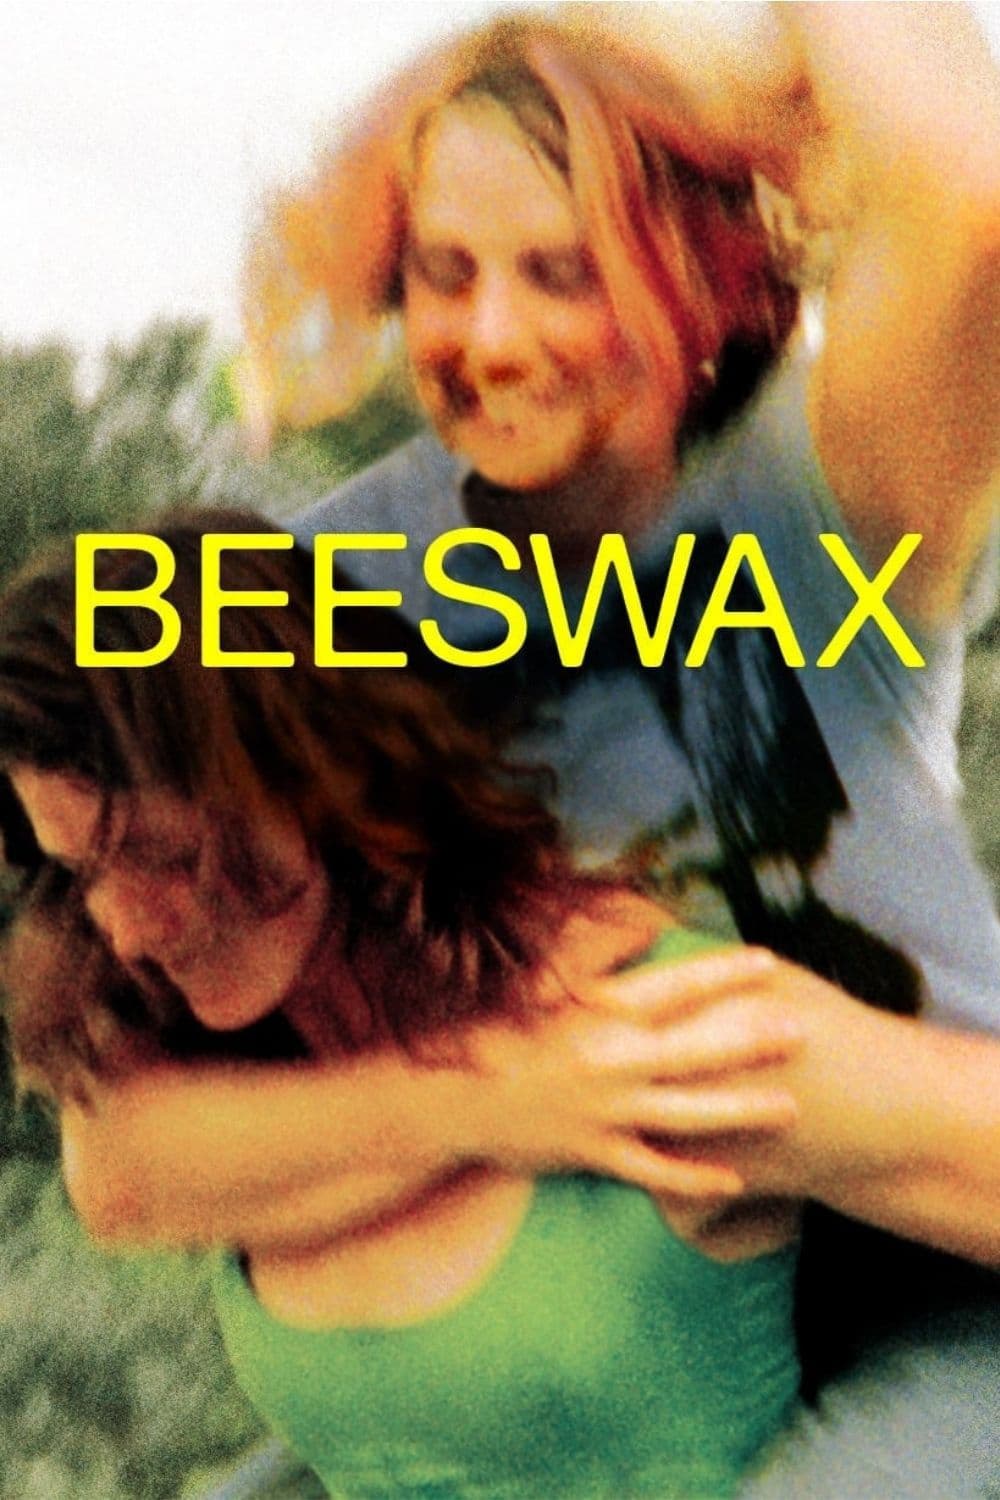 Beeswax film